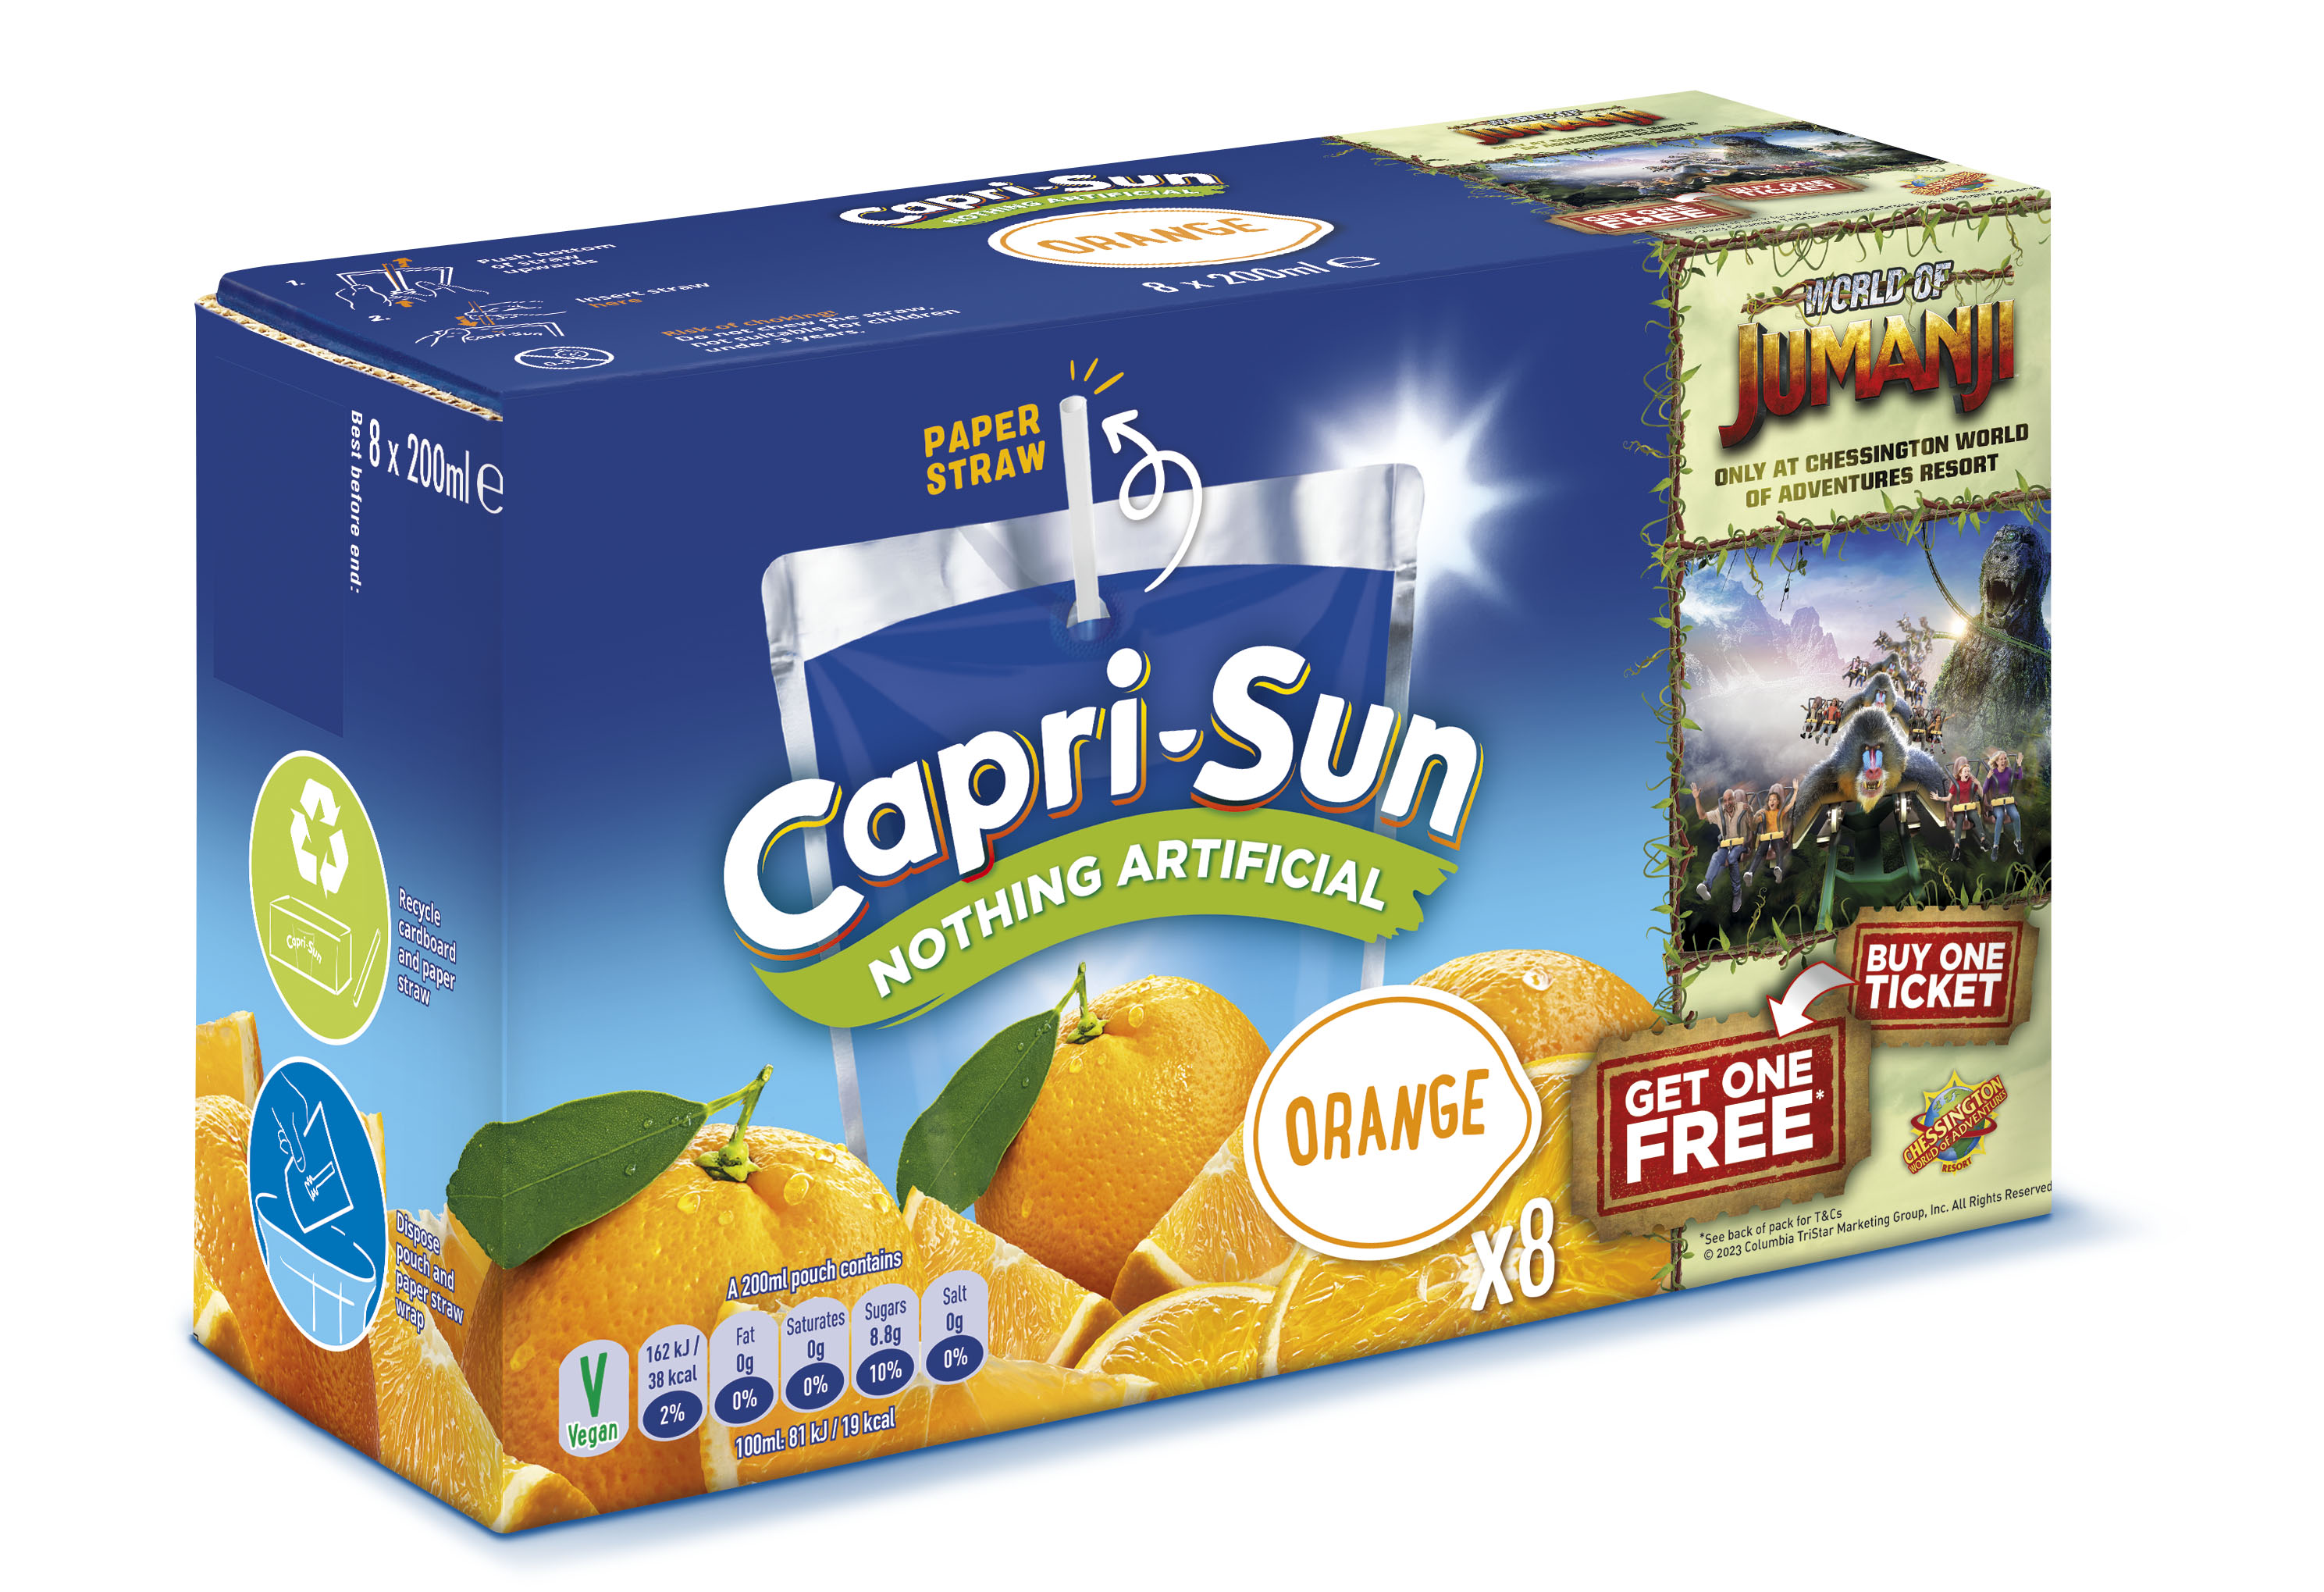 Capri-Sun Tropical 8 x 200ml, British Online